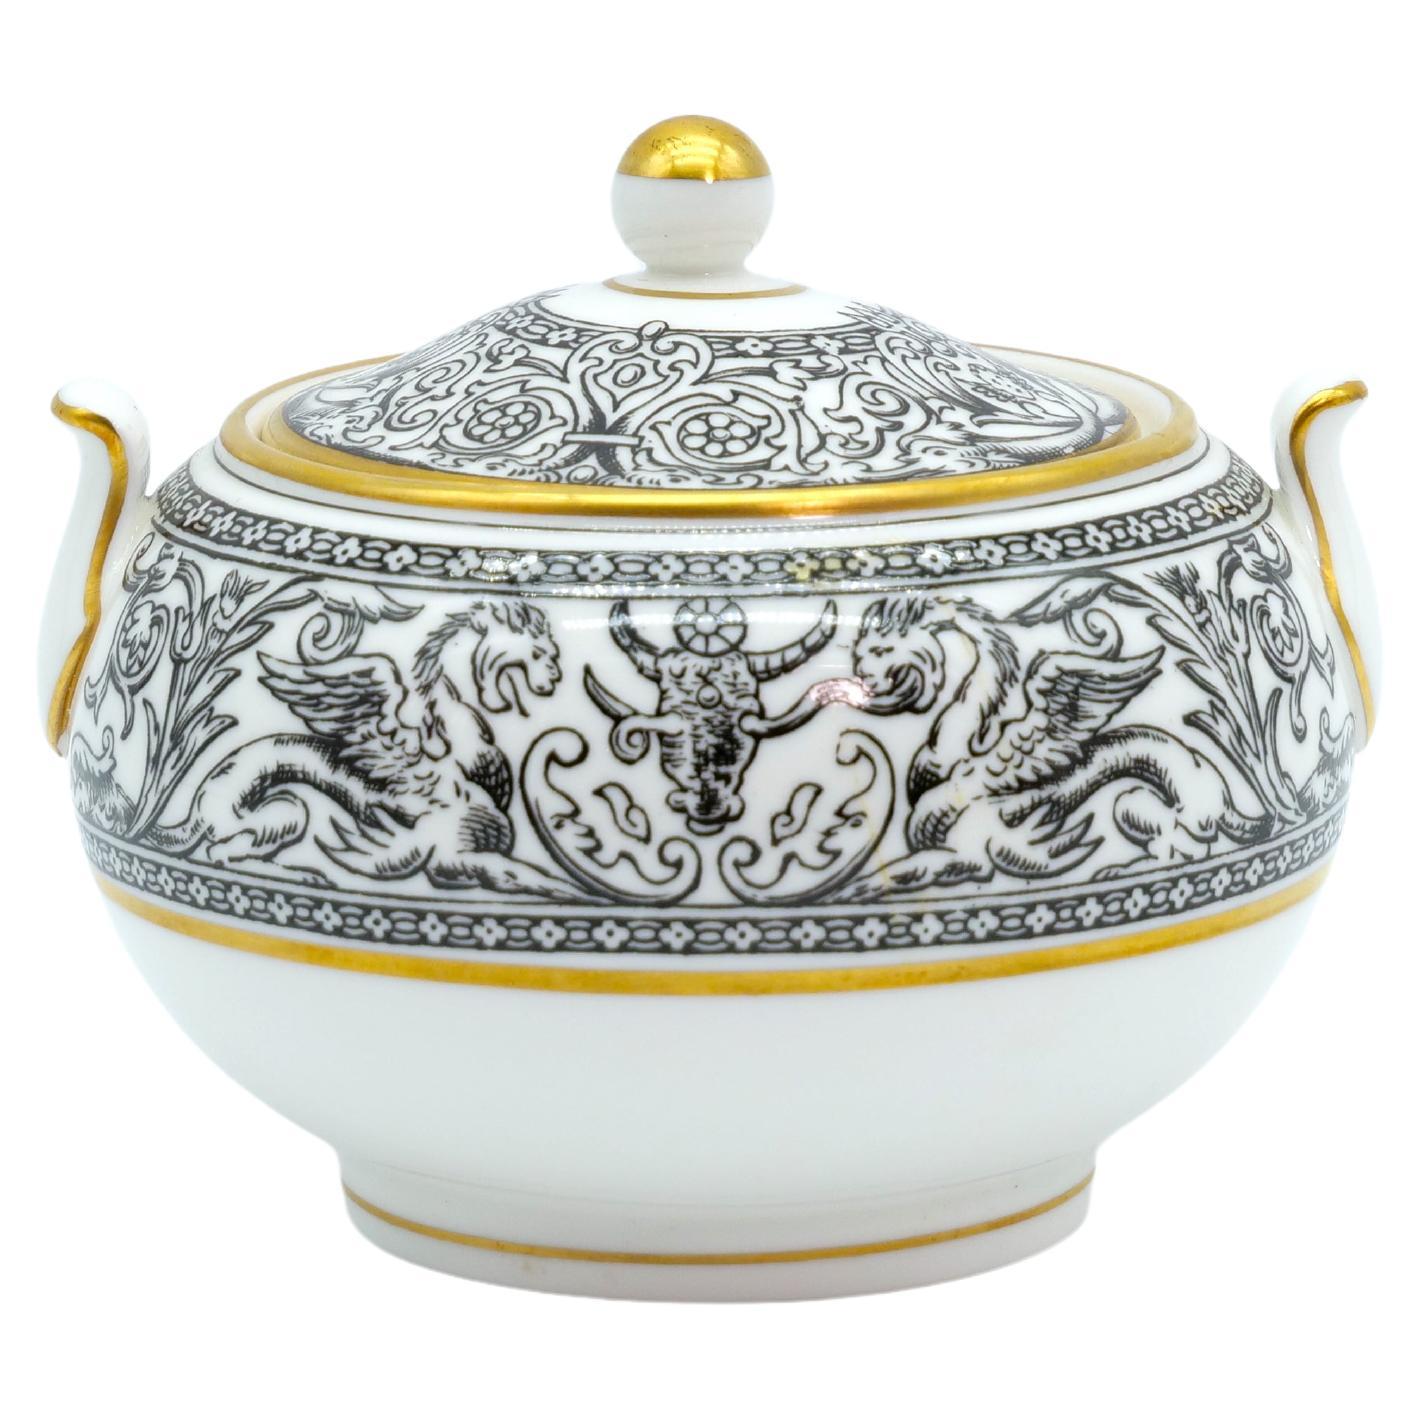 Gold Wedgwood Porcelain Tableware Dinner Service For 12 People For Sale